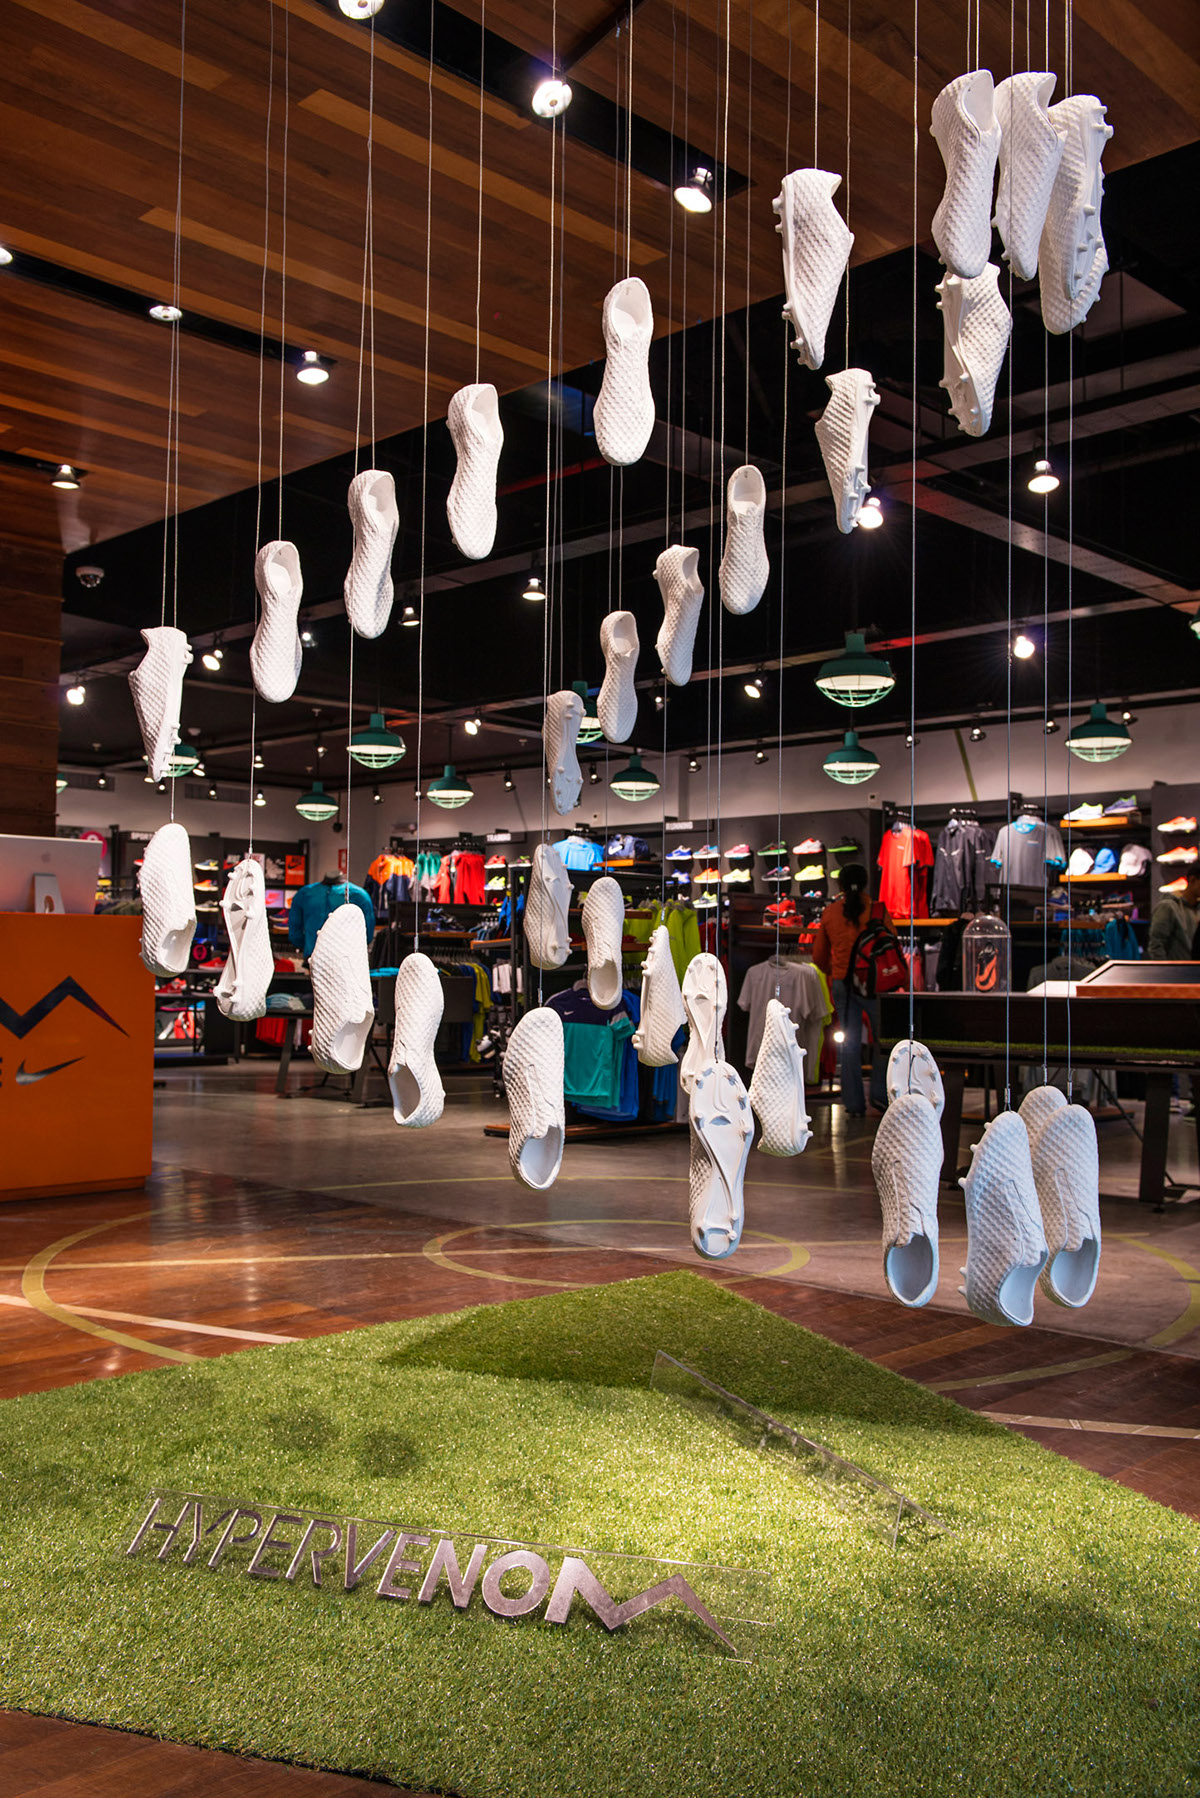 Nike installation Hypervenom shoes store Visual Merchandising Breed Attack jaw soccer Instore Installation